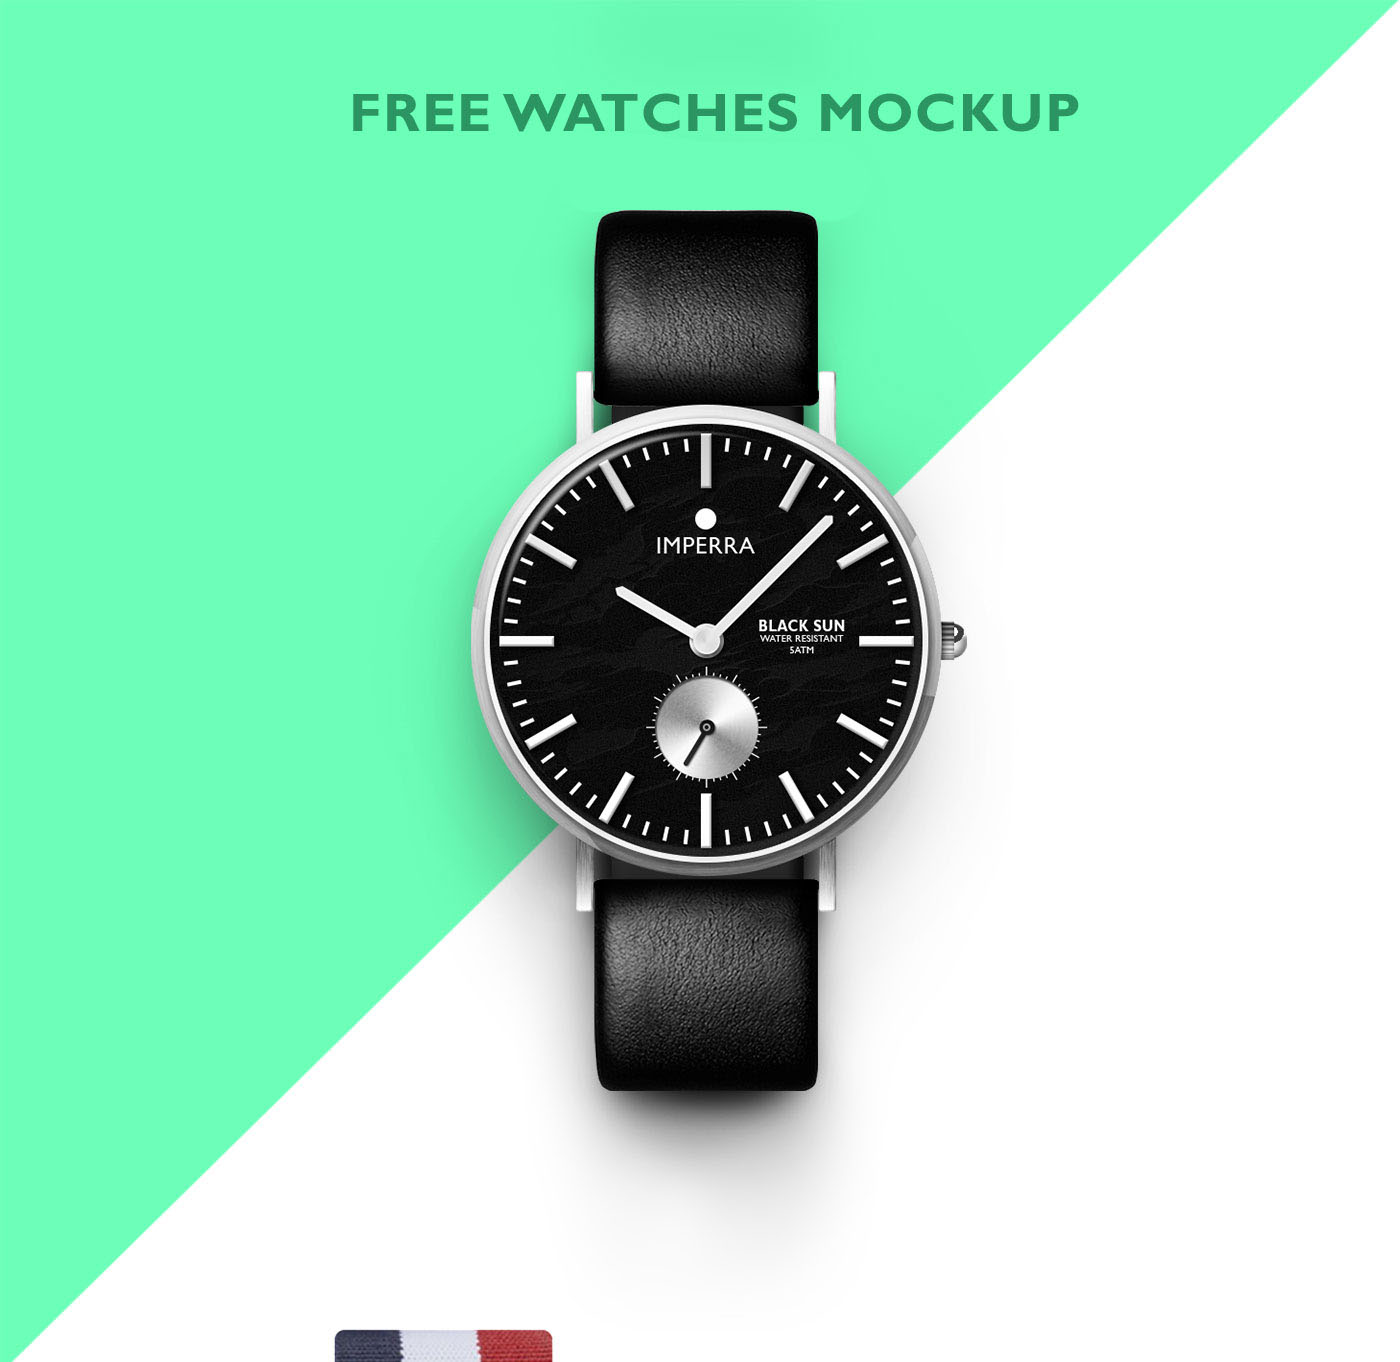 Mockup mock up watch watches mockup time freebies free